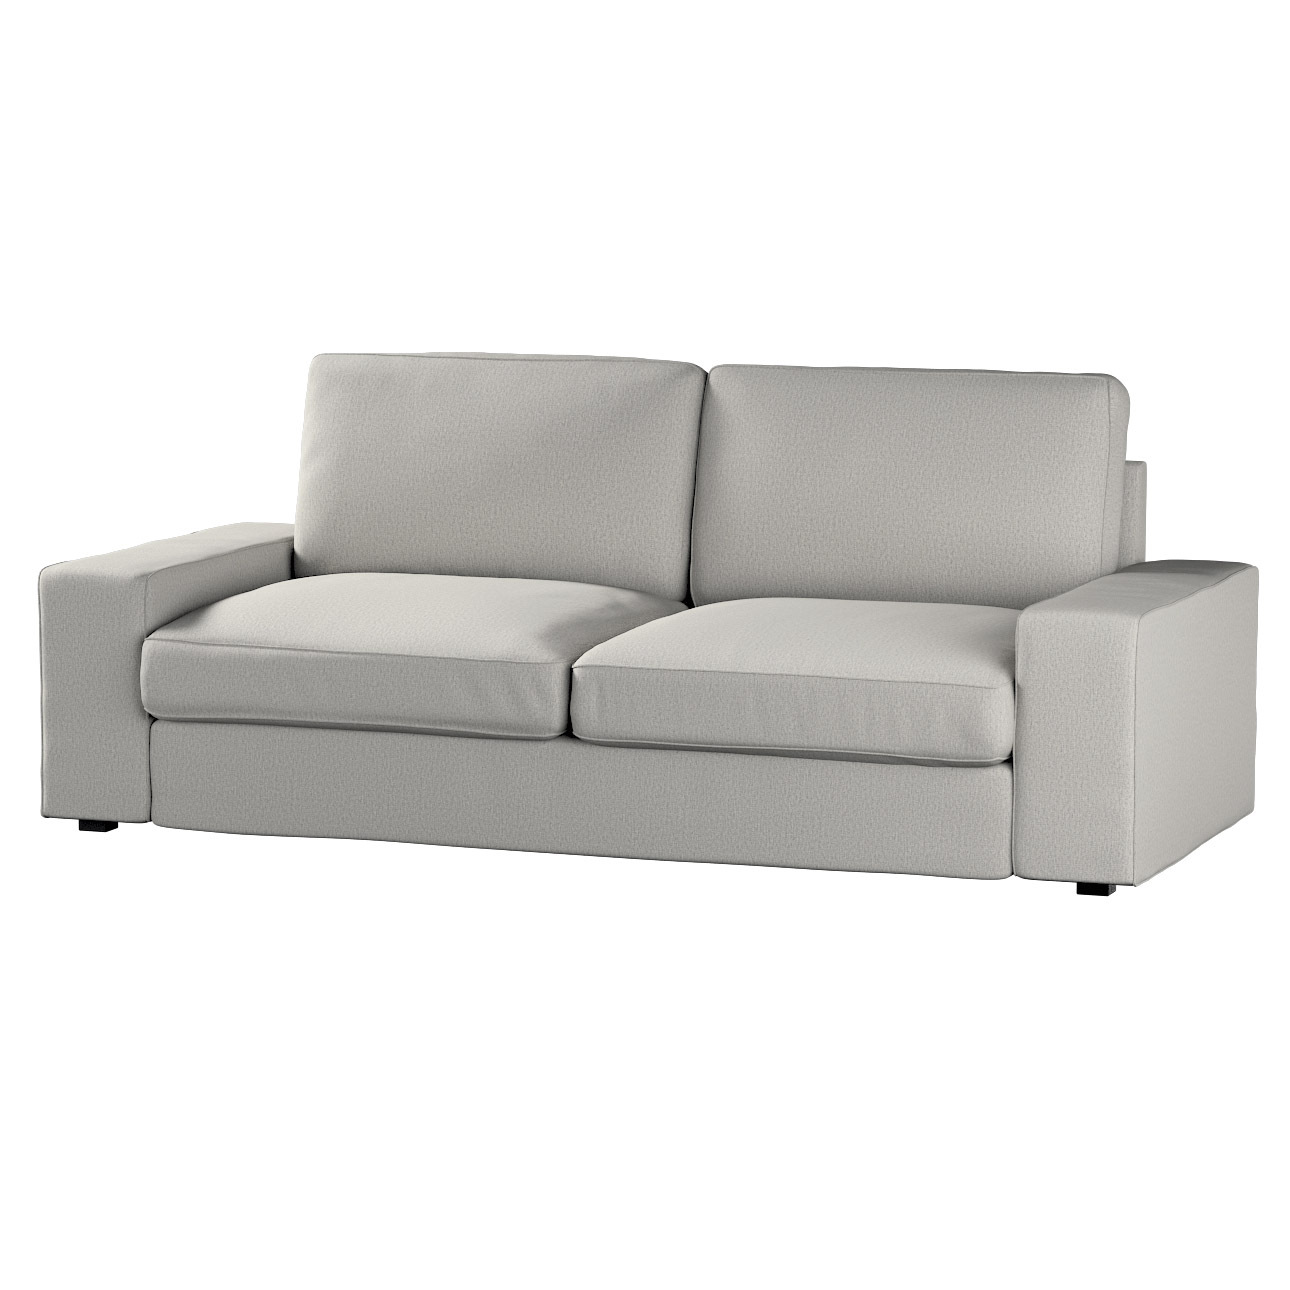 Bezug für Kivik 3-Sitzer Sofa, grau-beige, Bezug für Sofa Kivik 3-Sitzer, M günstig online kaufen